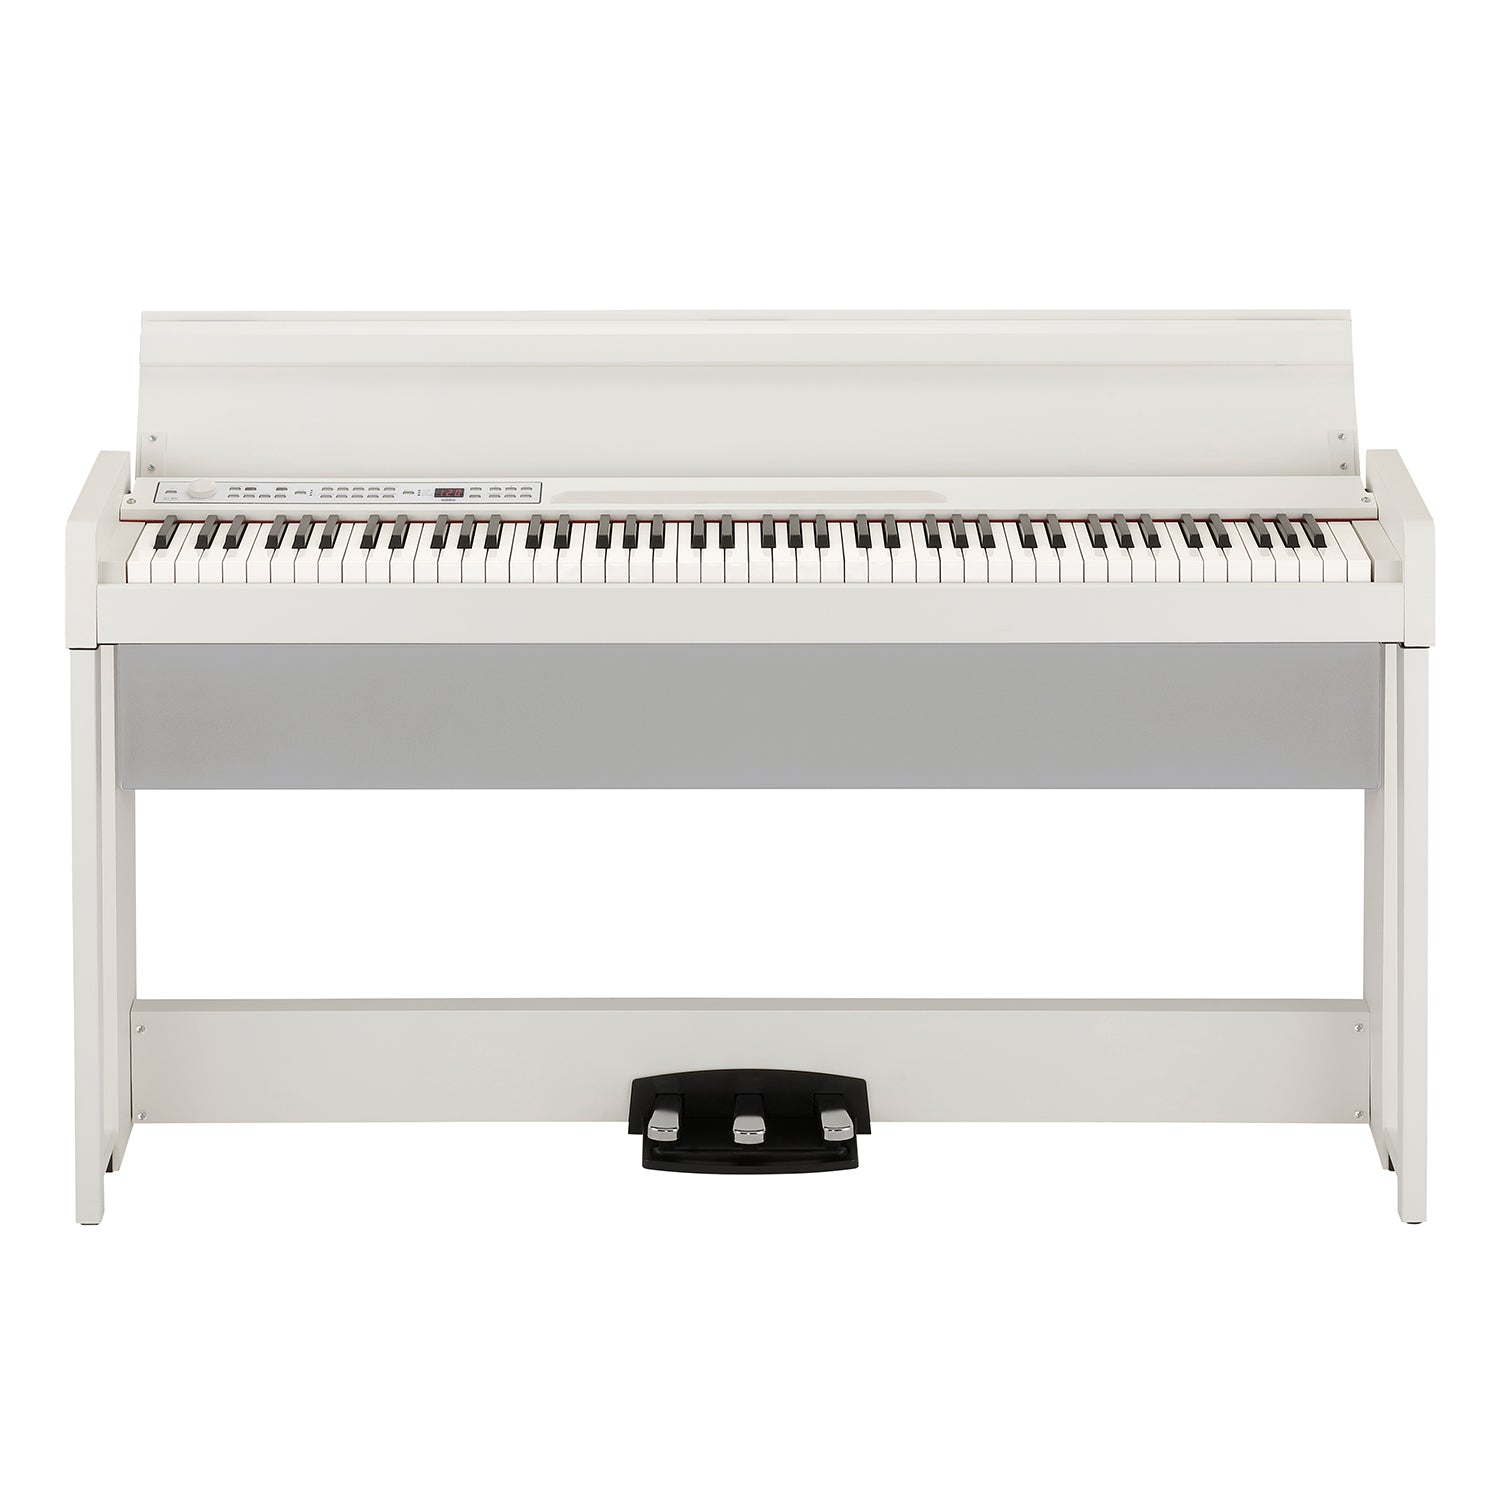 C1 Air Digital Piano - White KORG USA Official Store